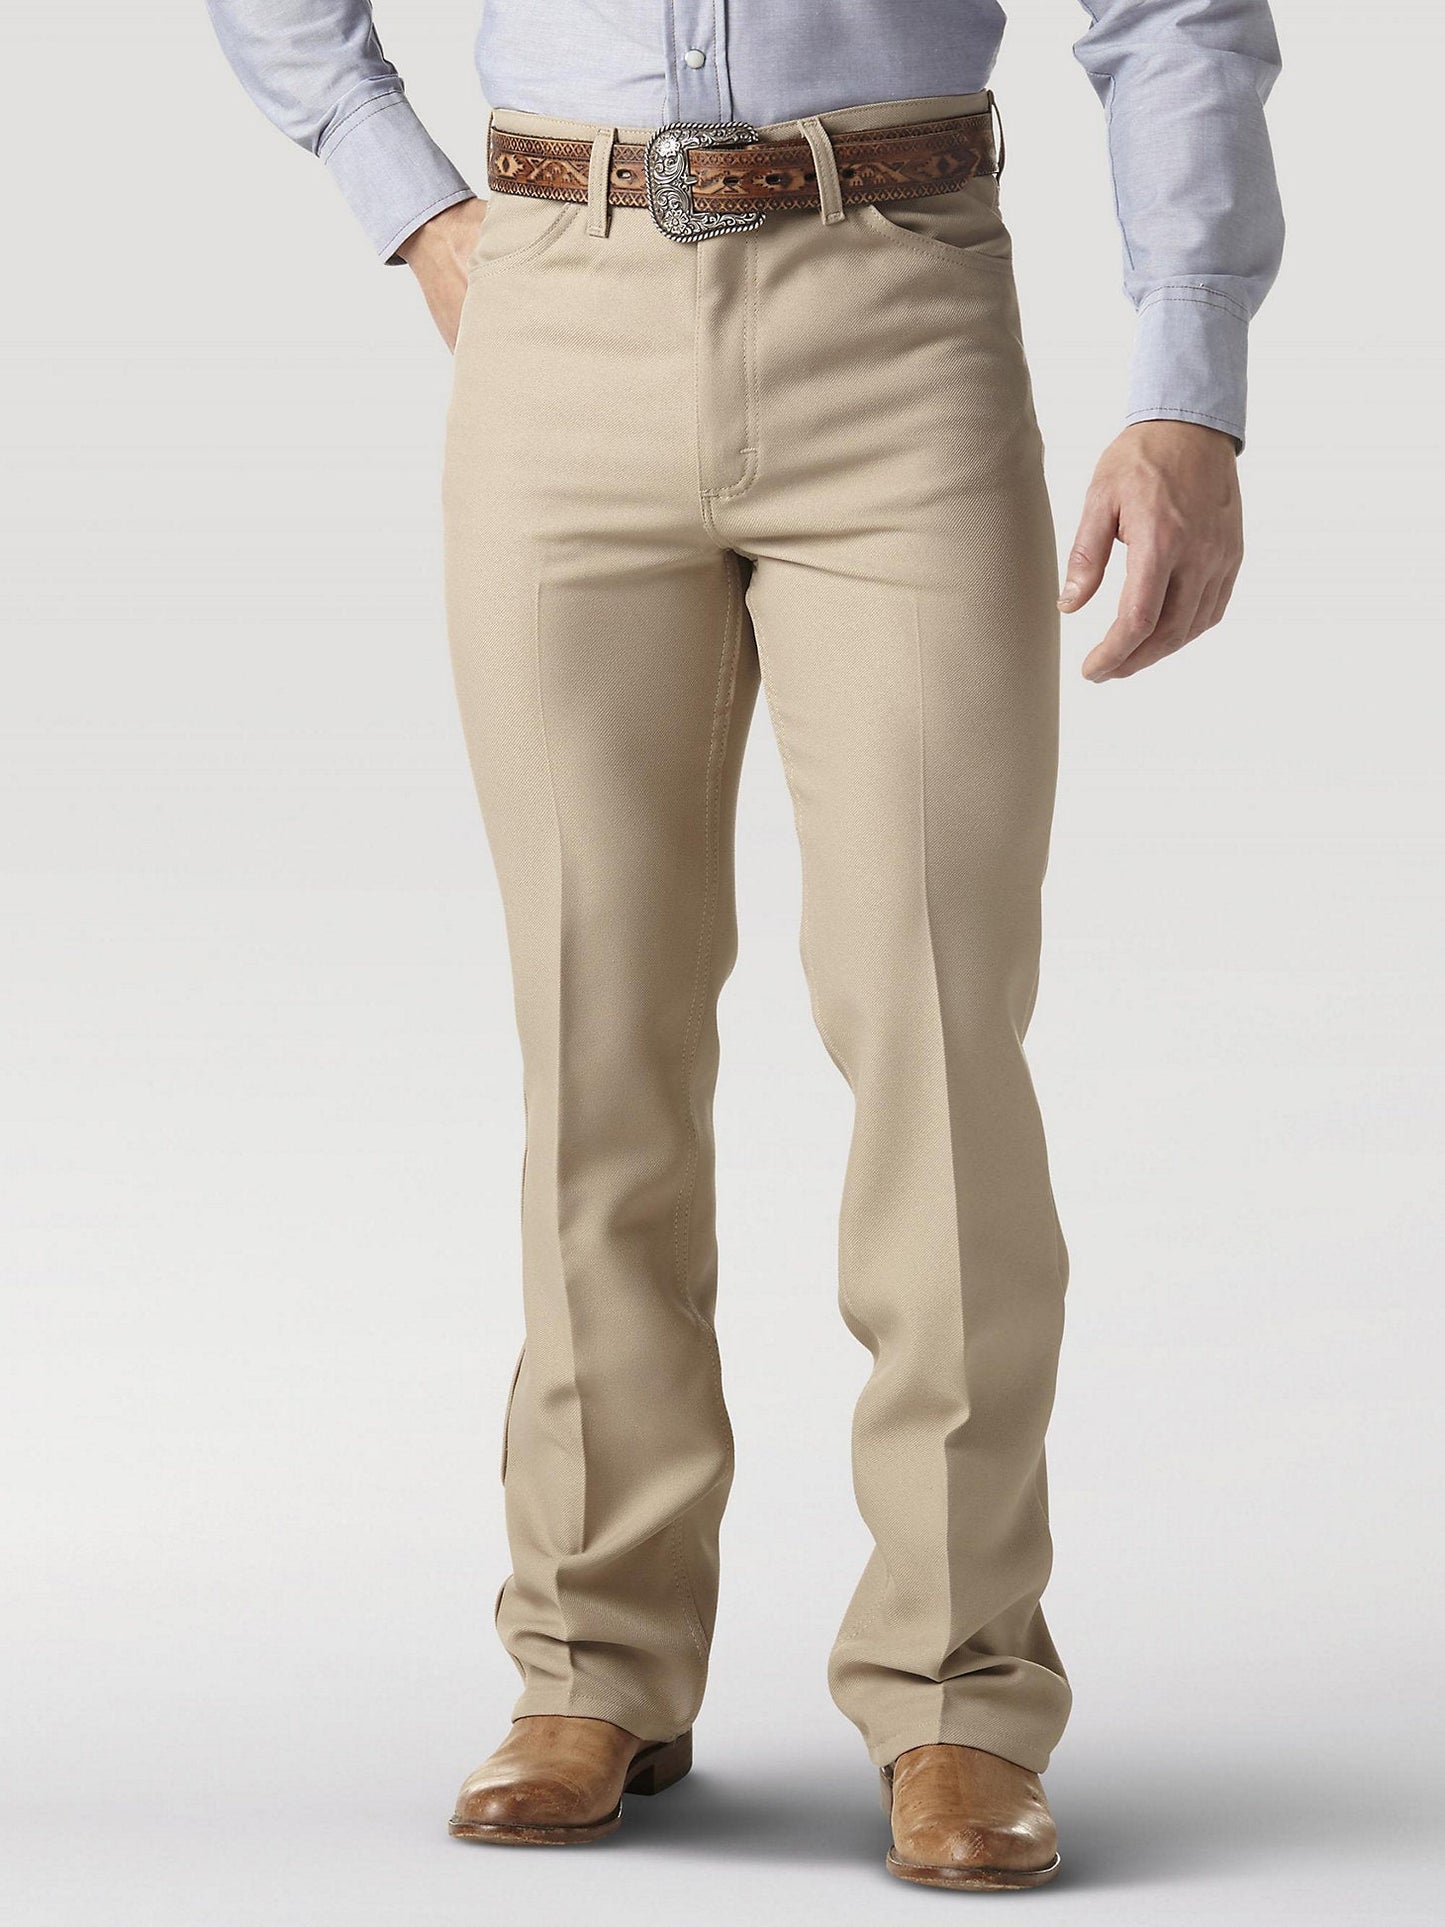 Wrangler® Men's Wrancher® Western Dress Pants - Solid Navy / Khaki